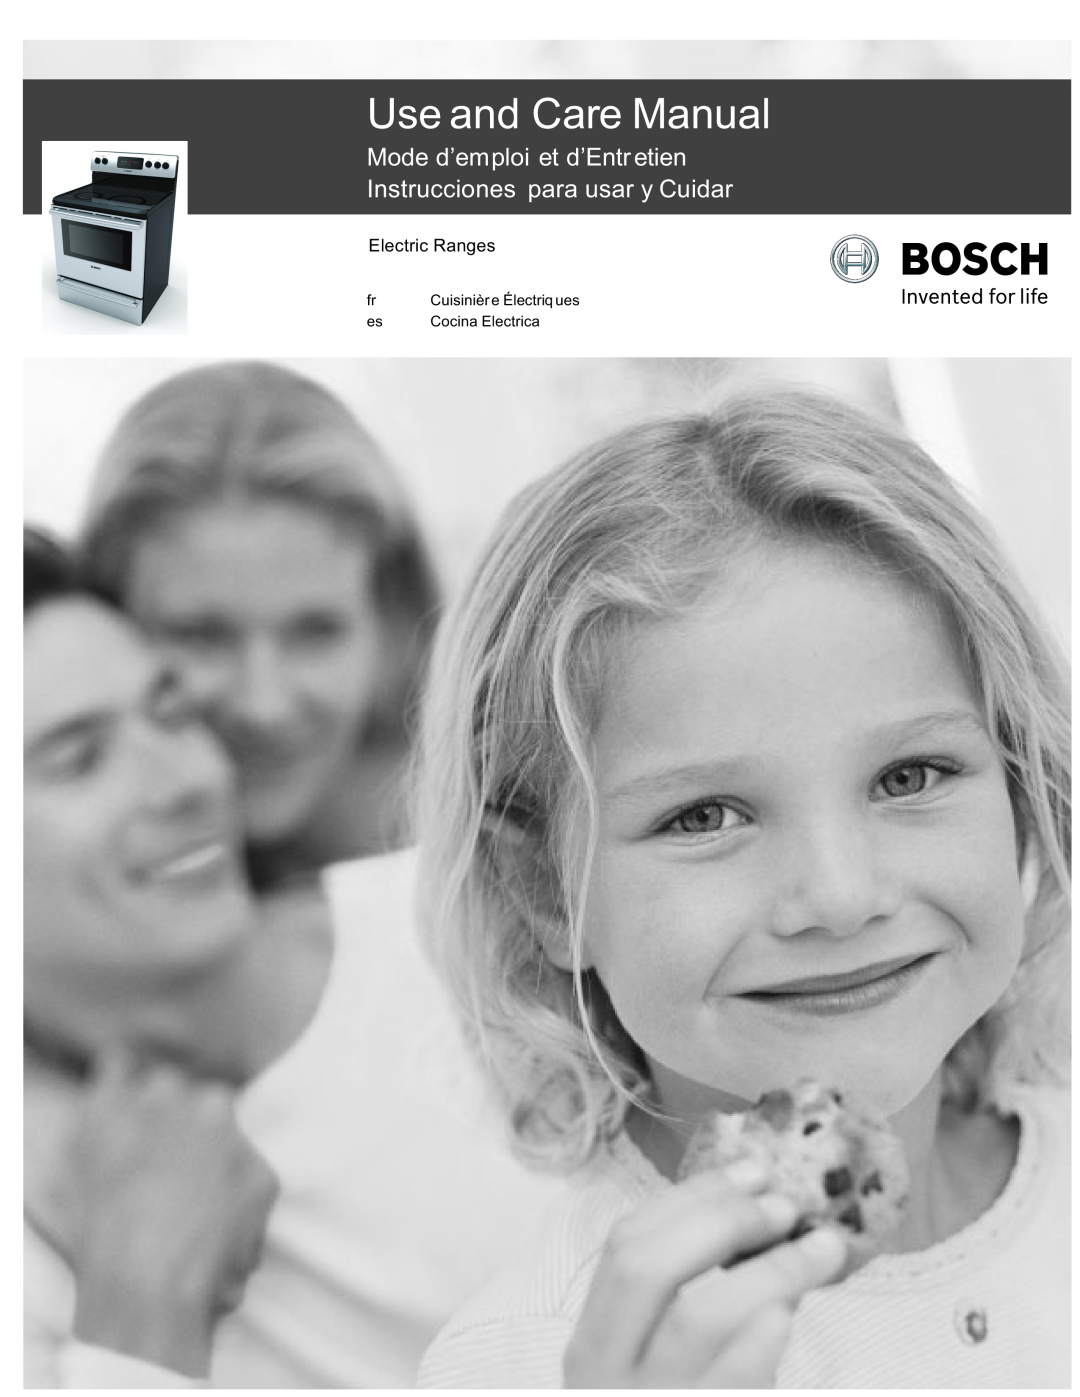 Bosch Appliances HES3053U manual Use and Care Manual, Mode d’emploi et d’Entr etien Instrucciones para usar y Cuidar 